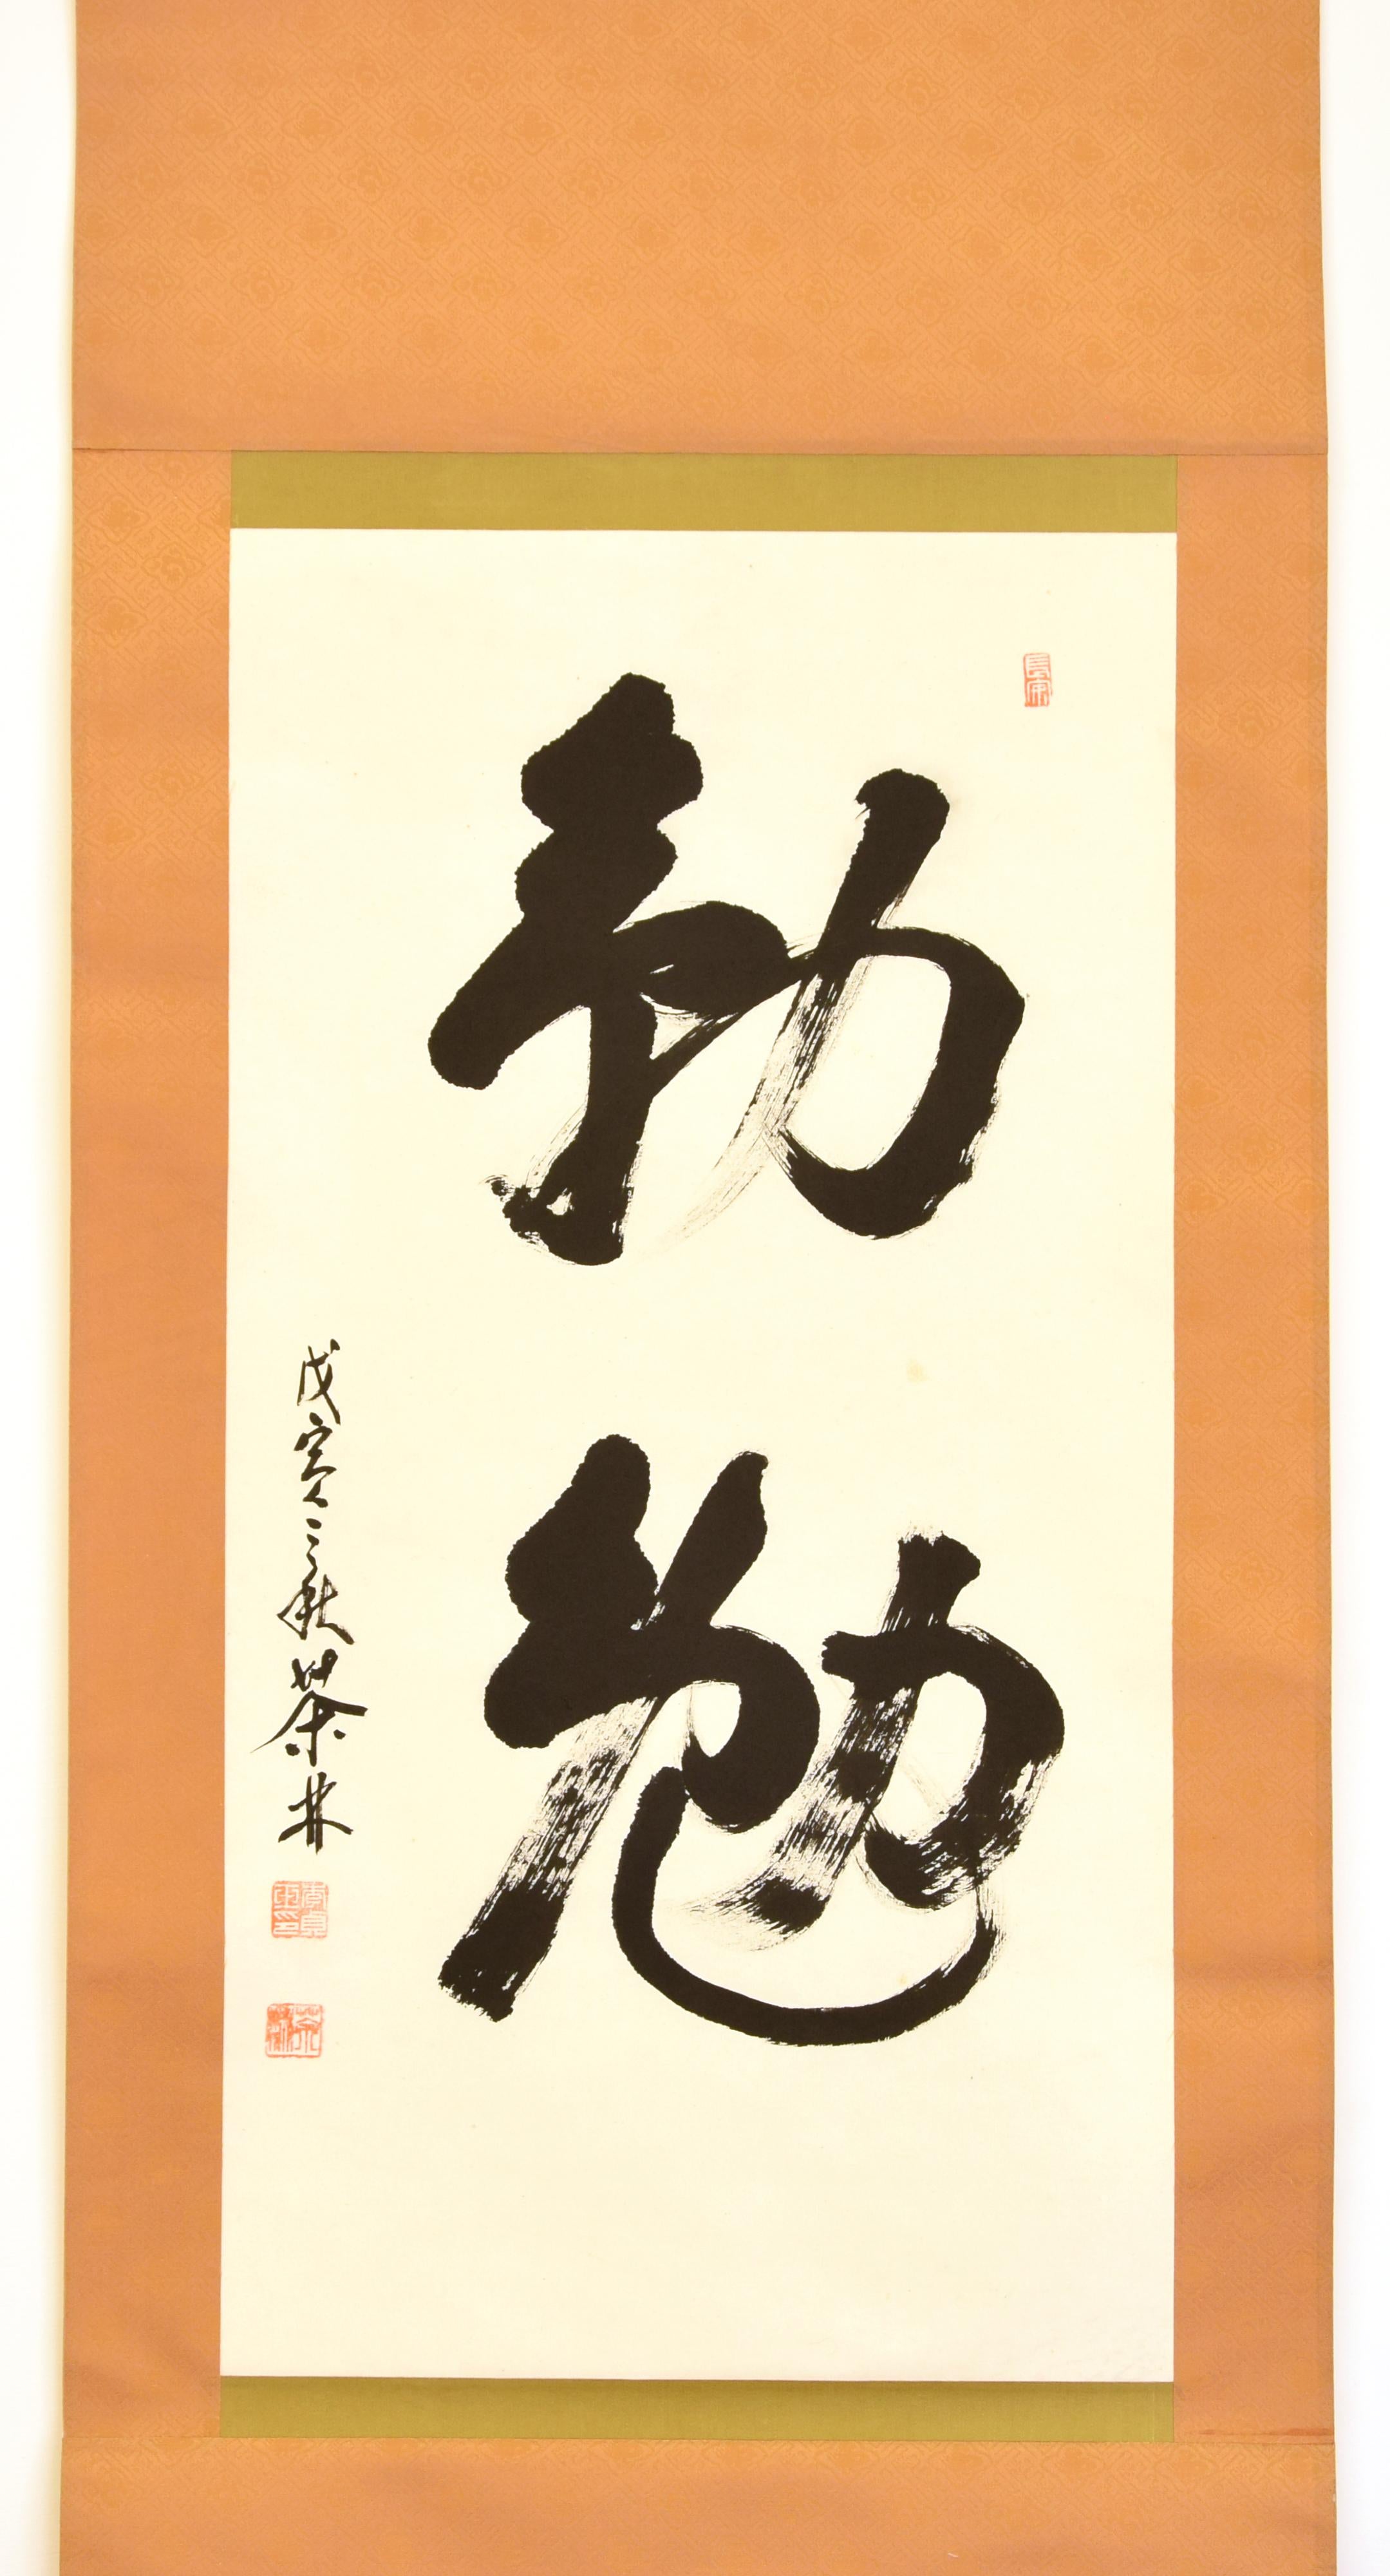 Calligraphie artistique chinoise Qin Mian - 1938 - Art de Li Zhen